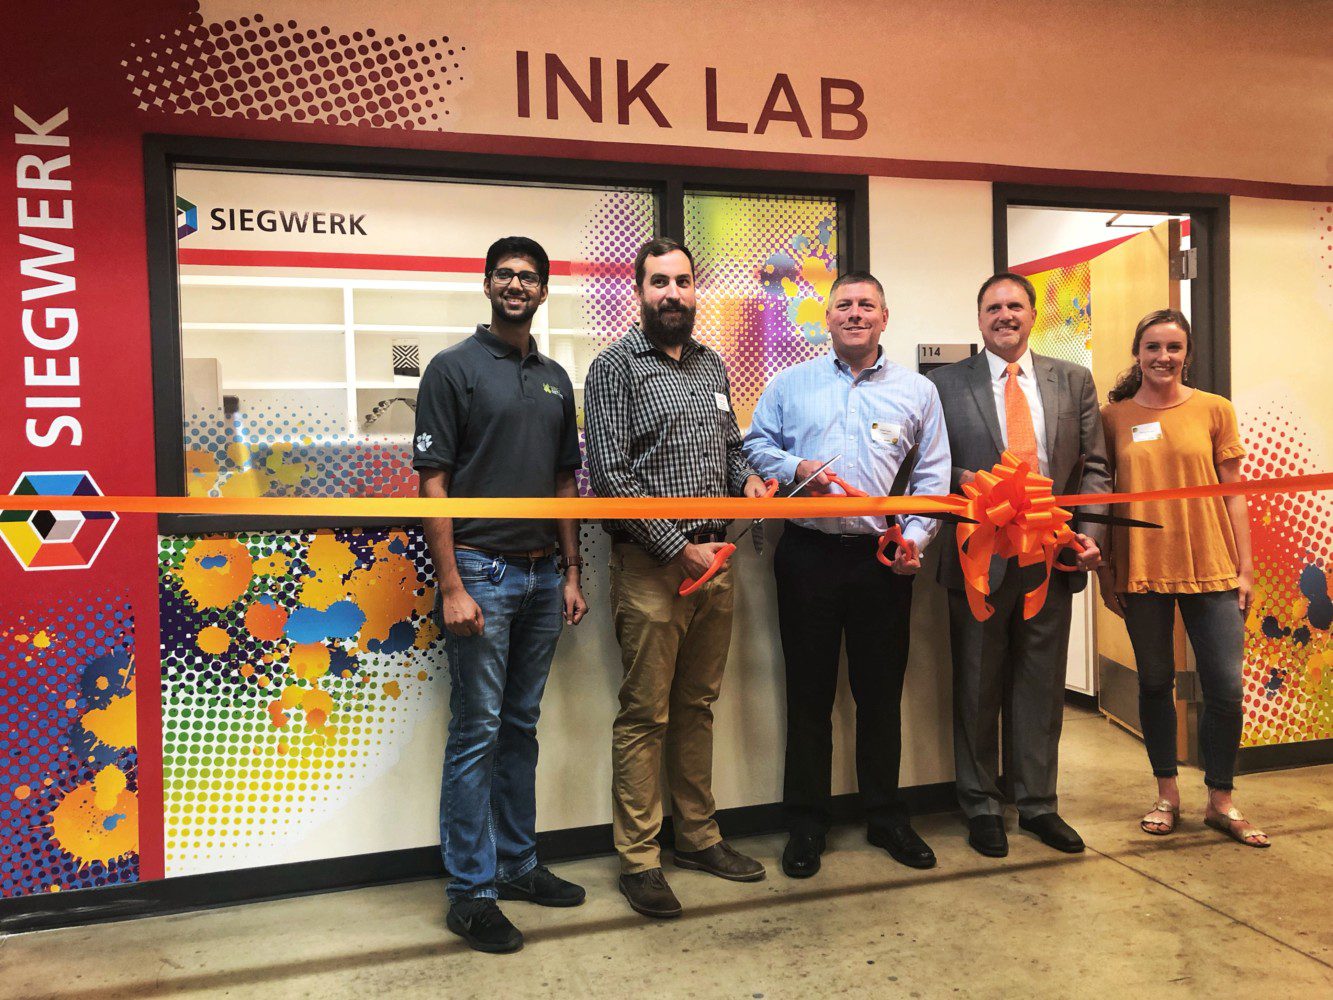 Clemson and Siegwerk reps cut a ribbon at the new Siwegwerk Ink Lab